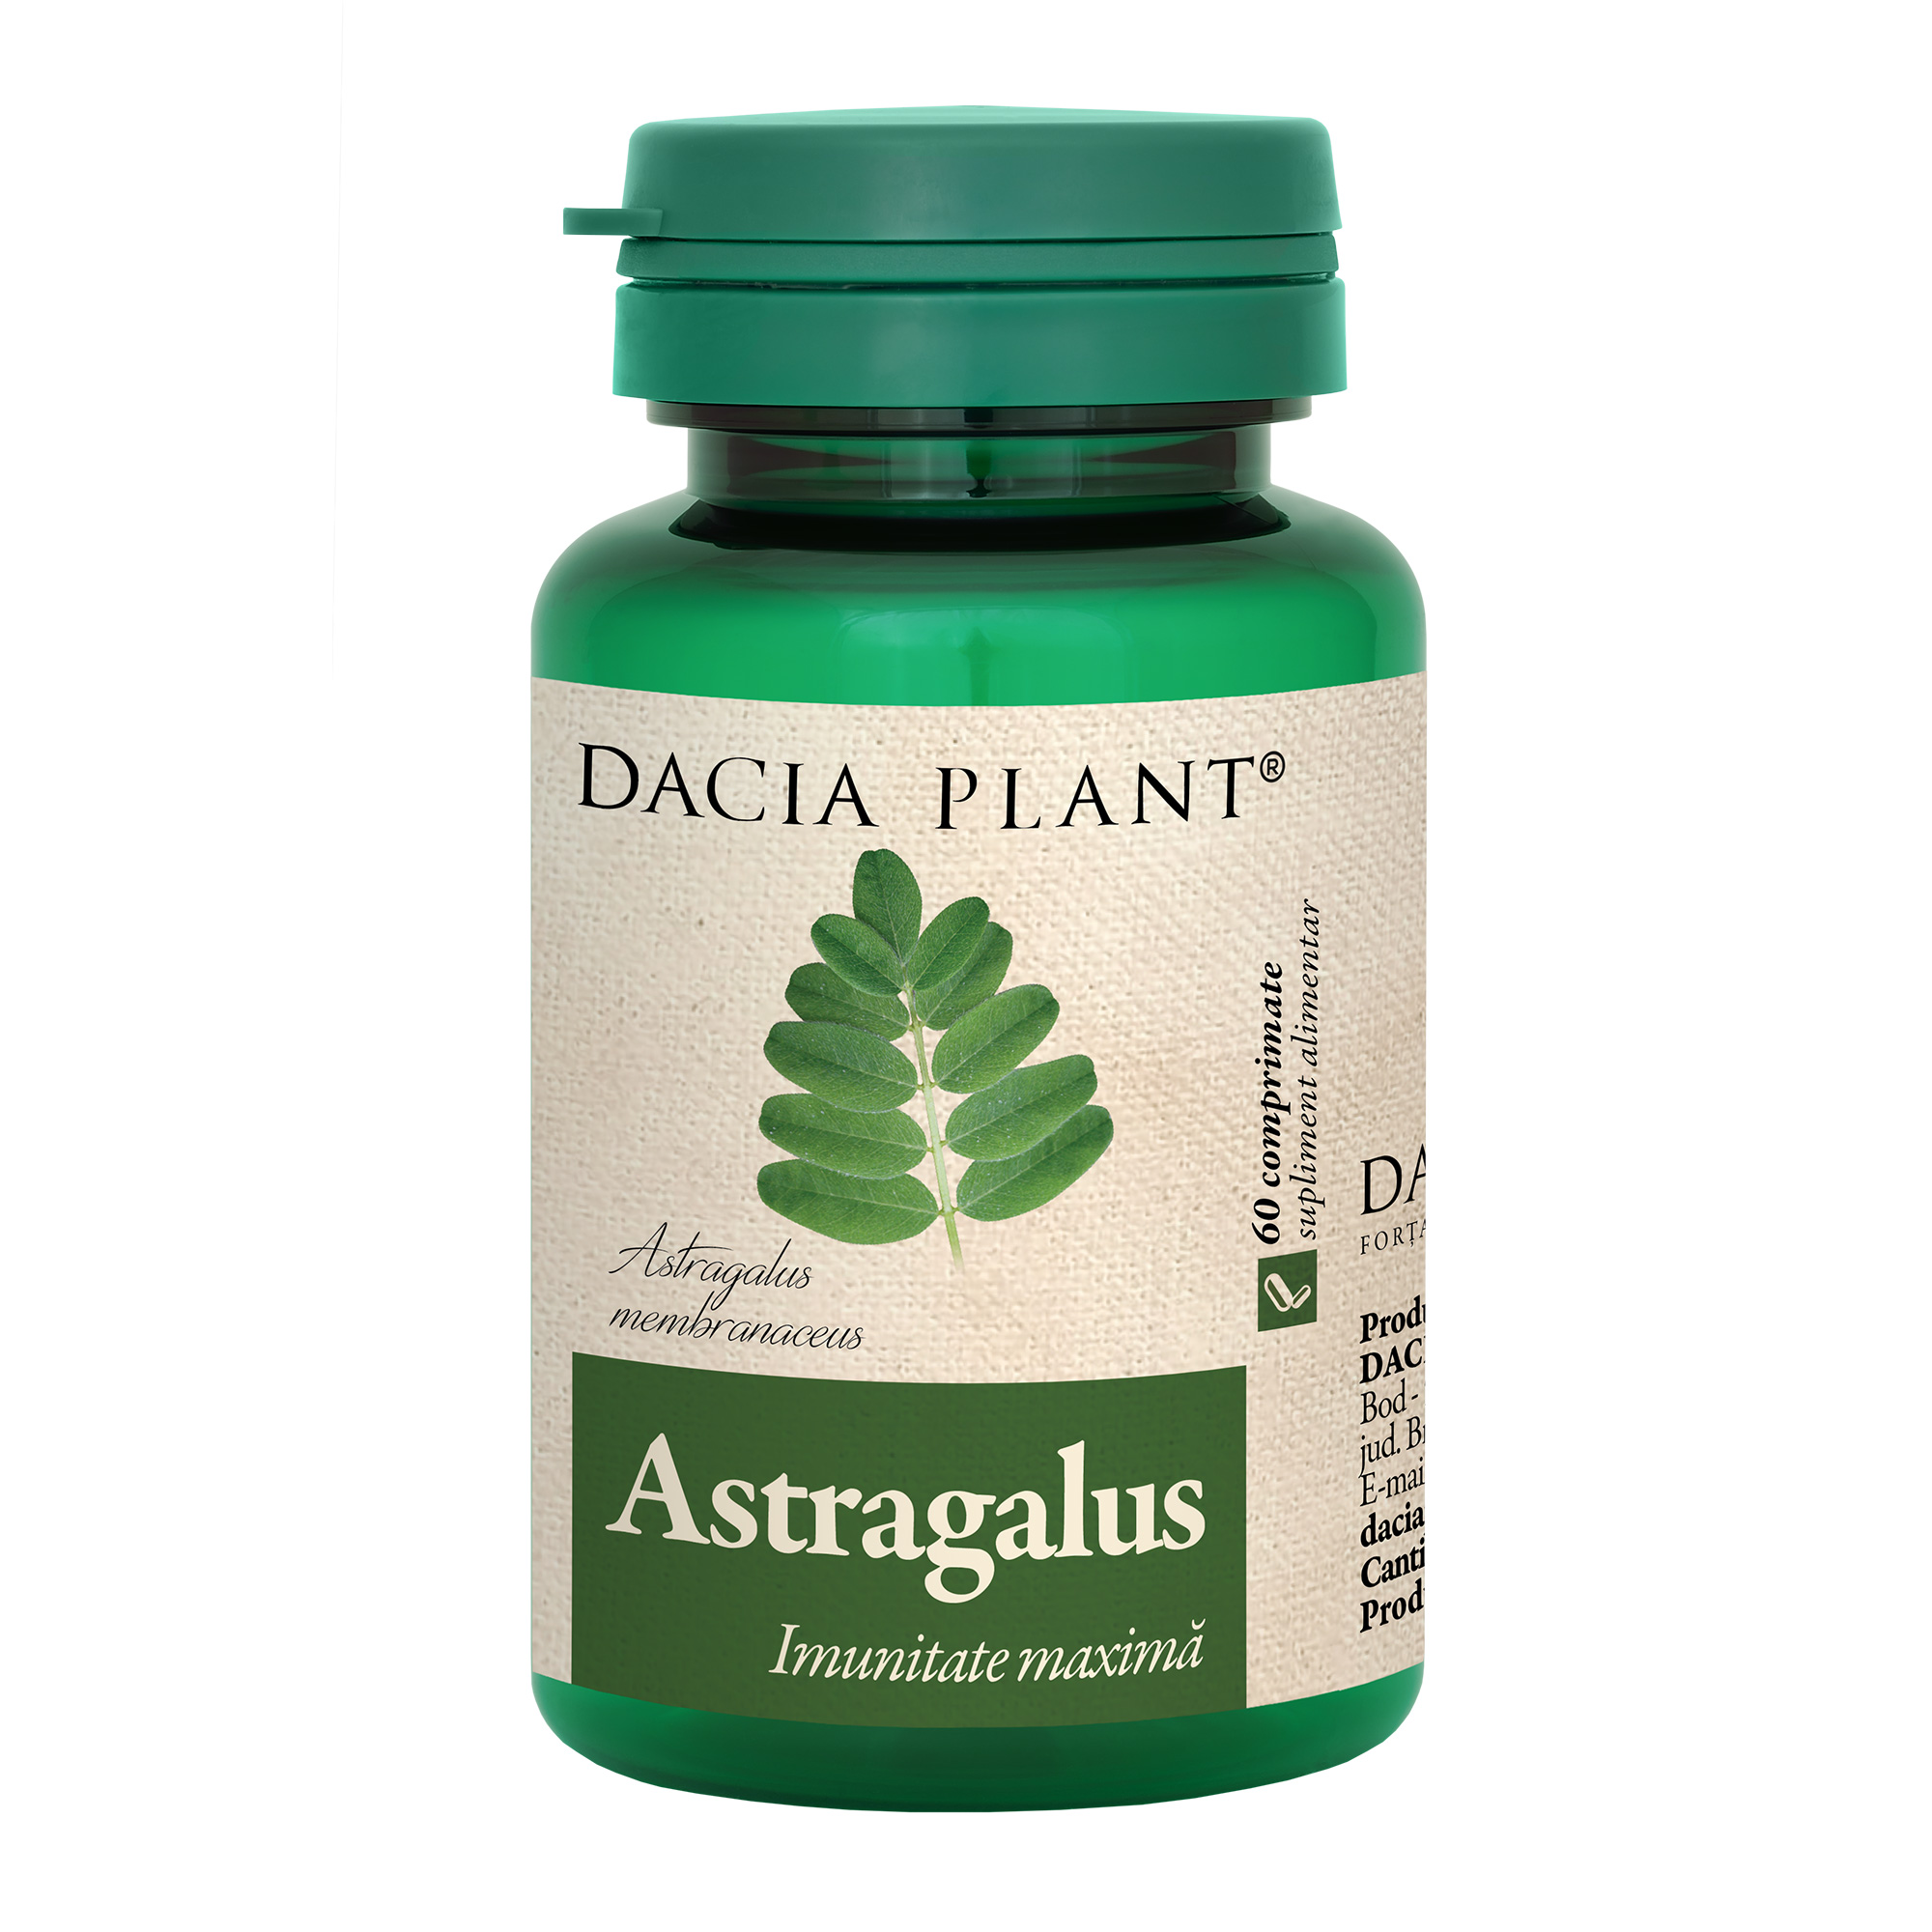 Astragalus comprimate Dacia Plant